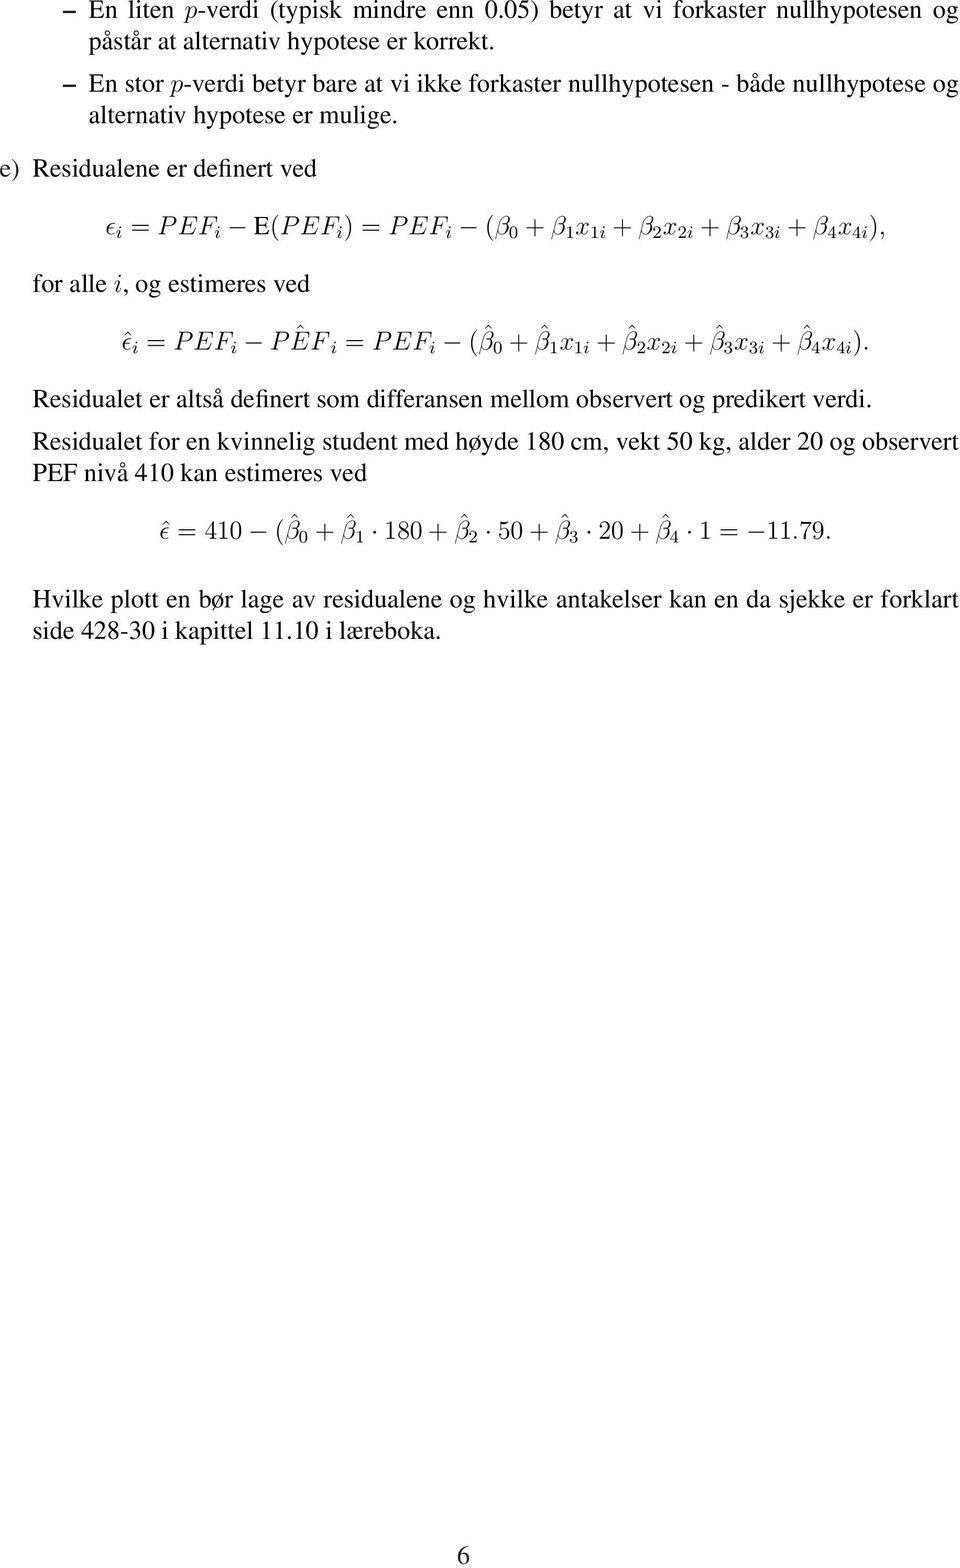 e) Residualene er definert ved ɛ i = P EF i E(P EF i ) = P EF i (β 0 + β 1 x 1i + β 2 x 2i + β 3 x 3i + β 4 x 4i ), for alle i, og estimeres ved ˆɛ i = P EF i ˆ P EF i = P EF i ( ˆβ 0 + ˆβ 1 x 1i +